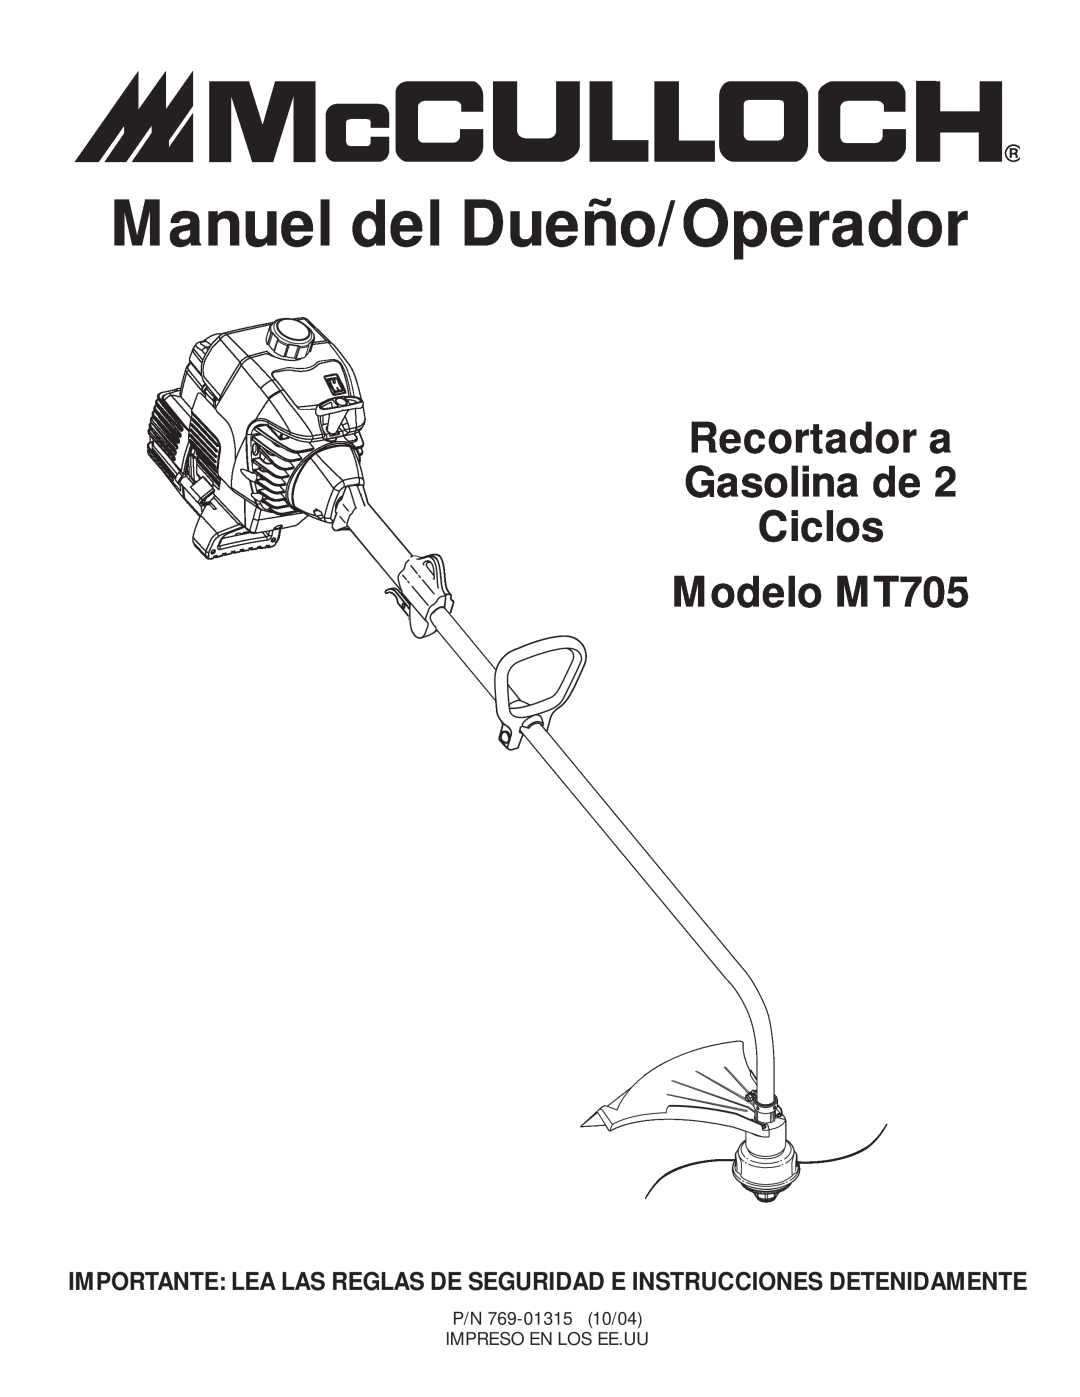 McCulloch manual Manuel del Dueño/Operador, Recortador a Gasolina de Ciclos Modelo MT705 